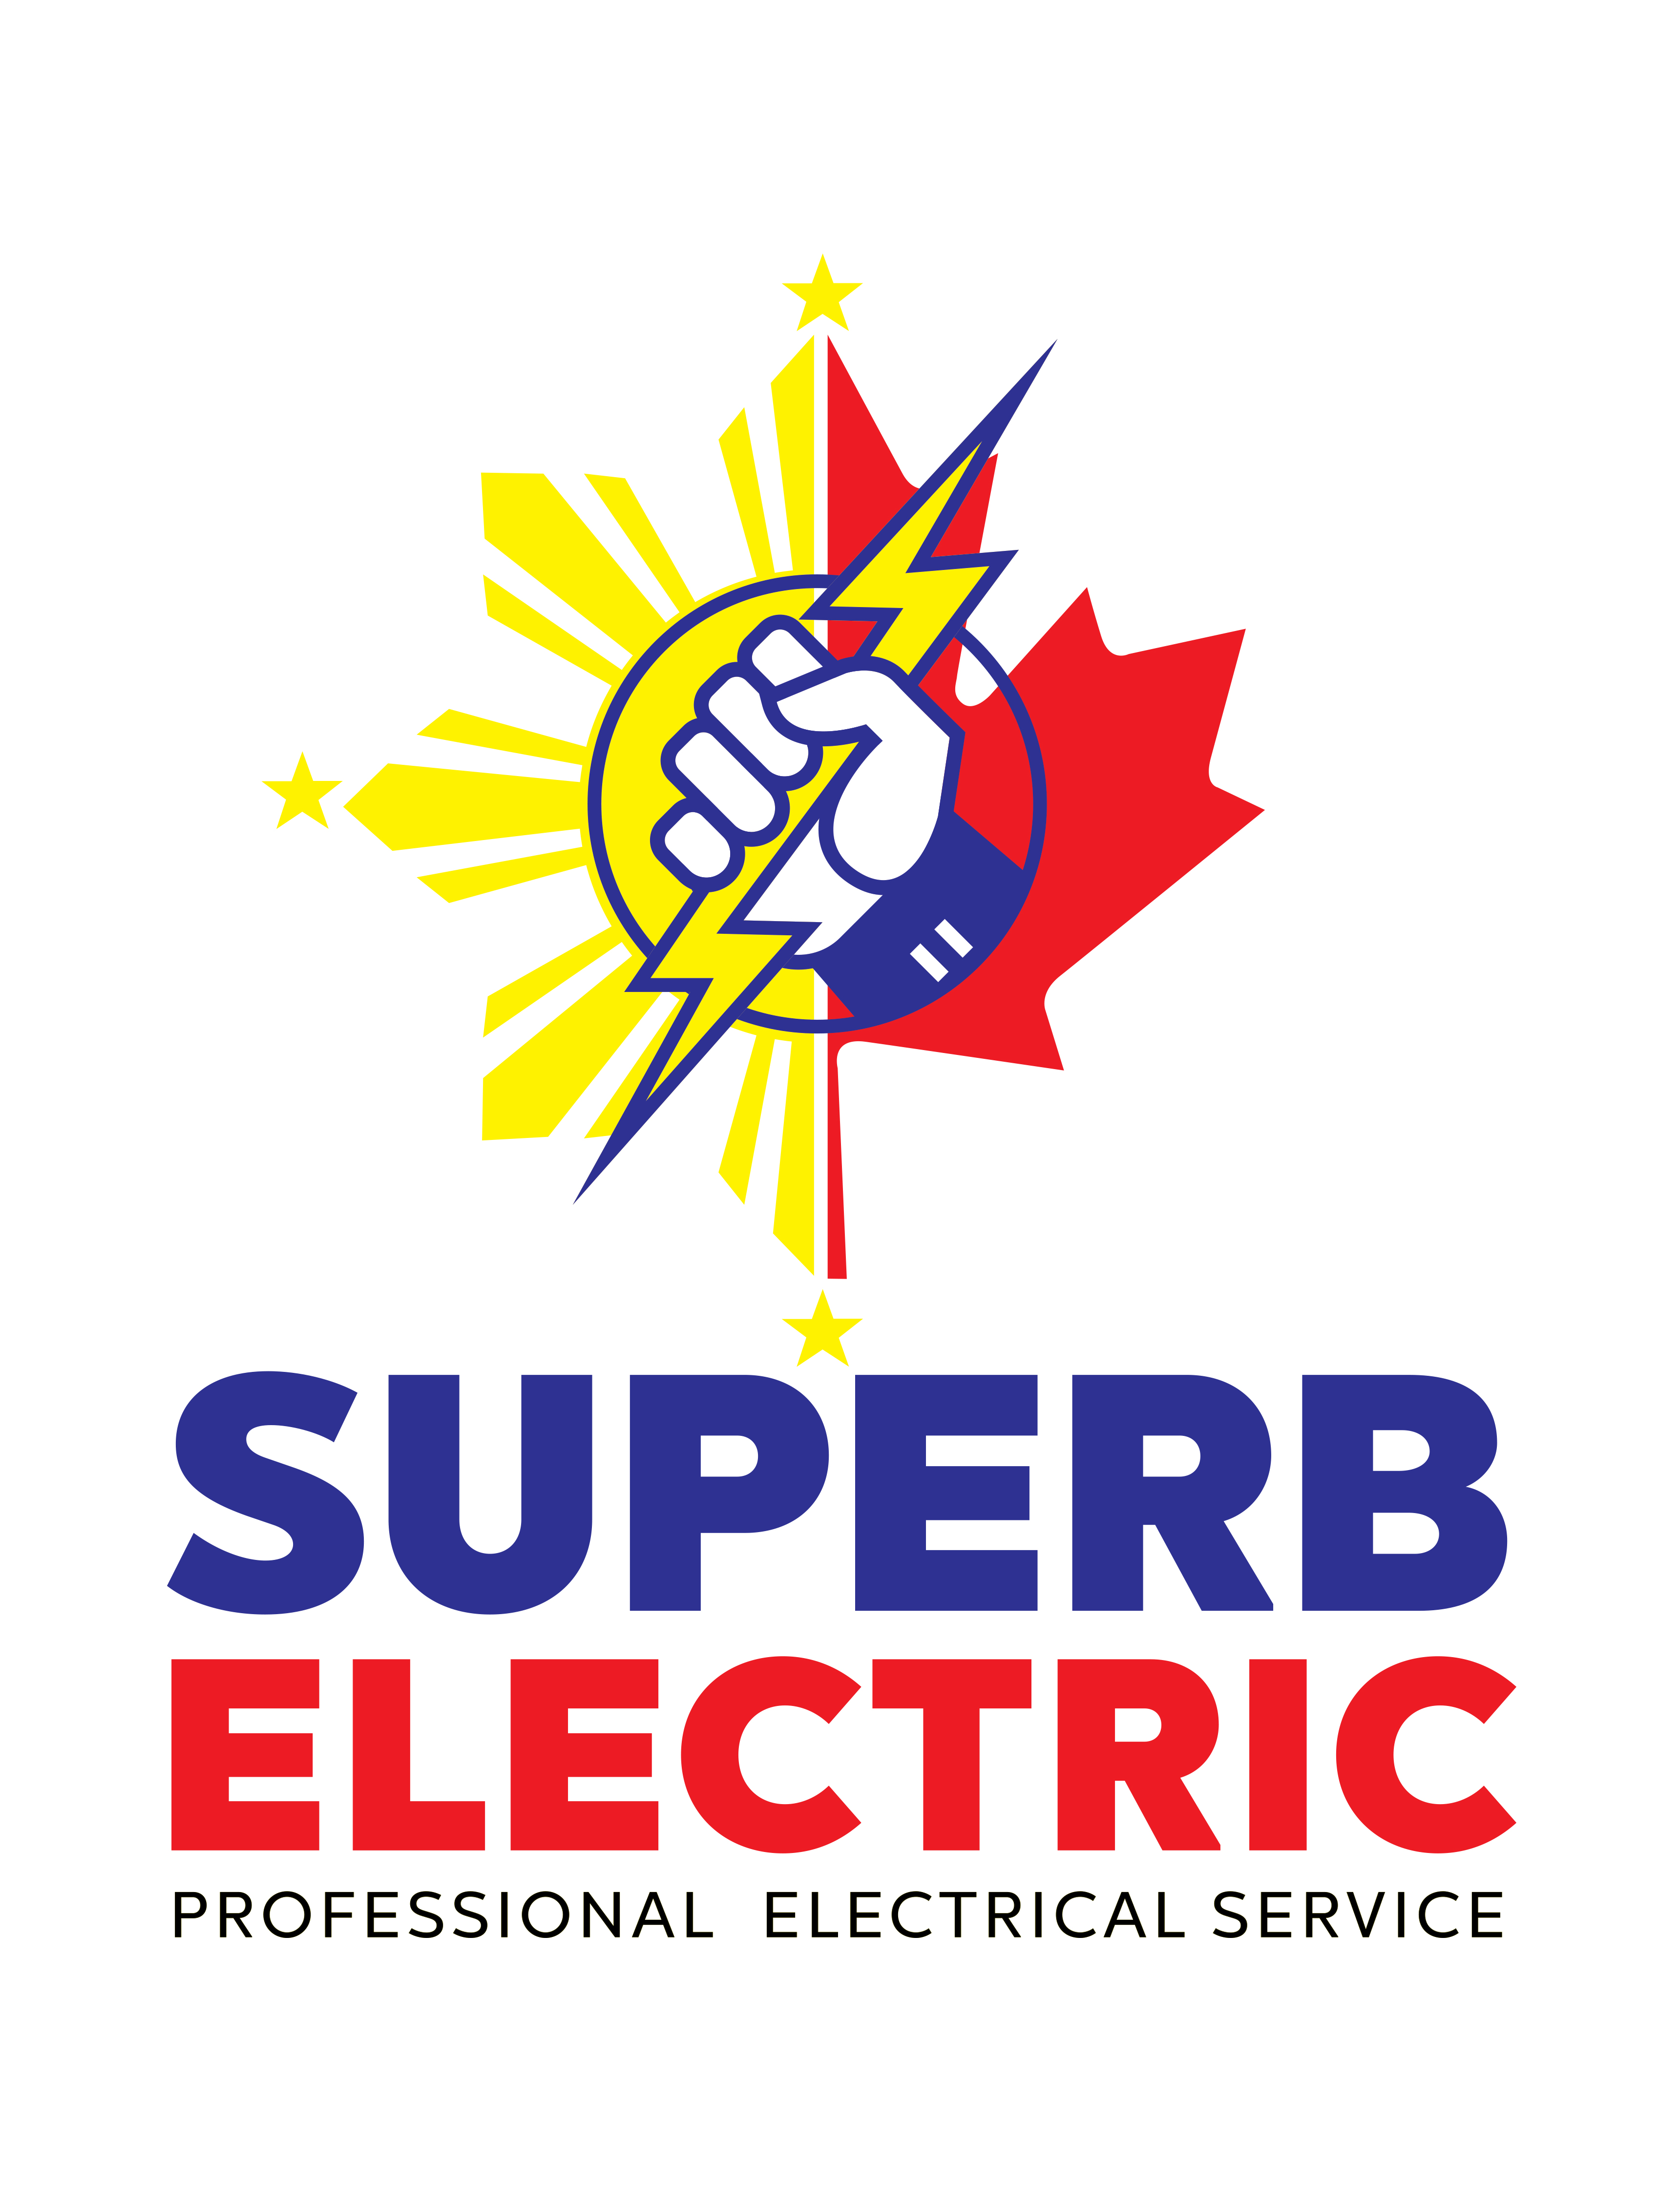 Superb Electric Ltd